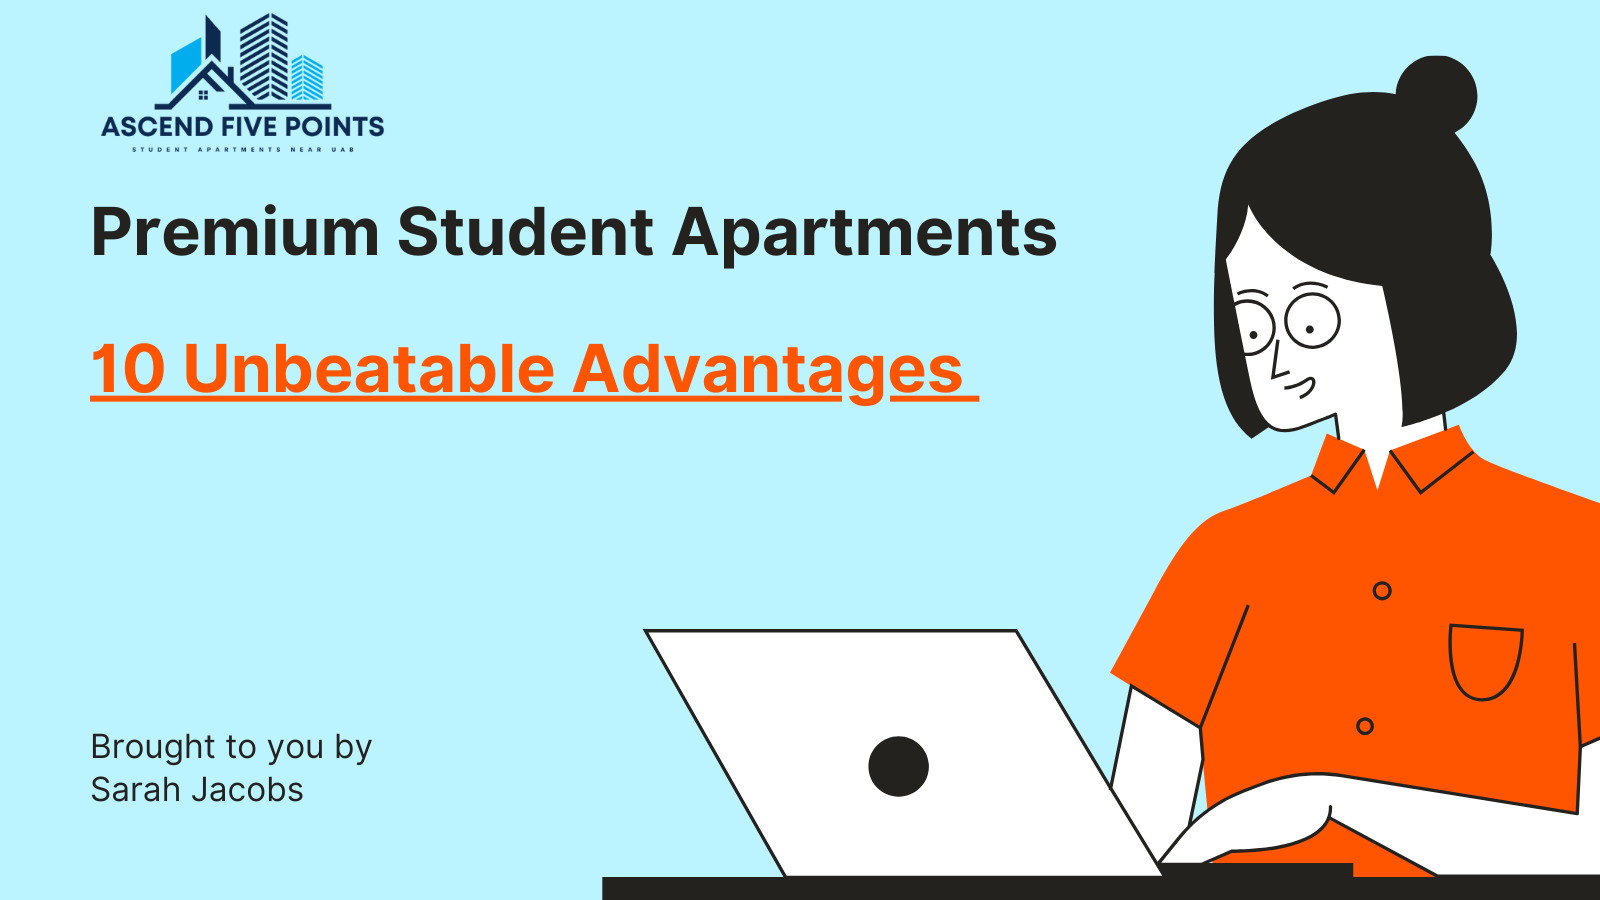 10 advantages of Premium Student Apartments